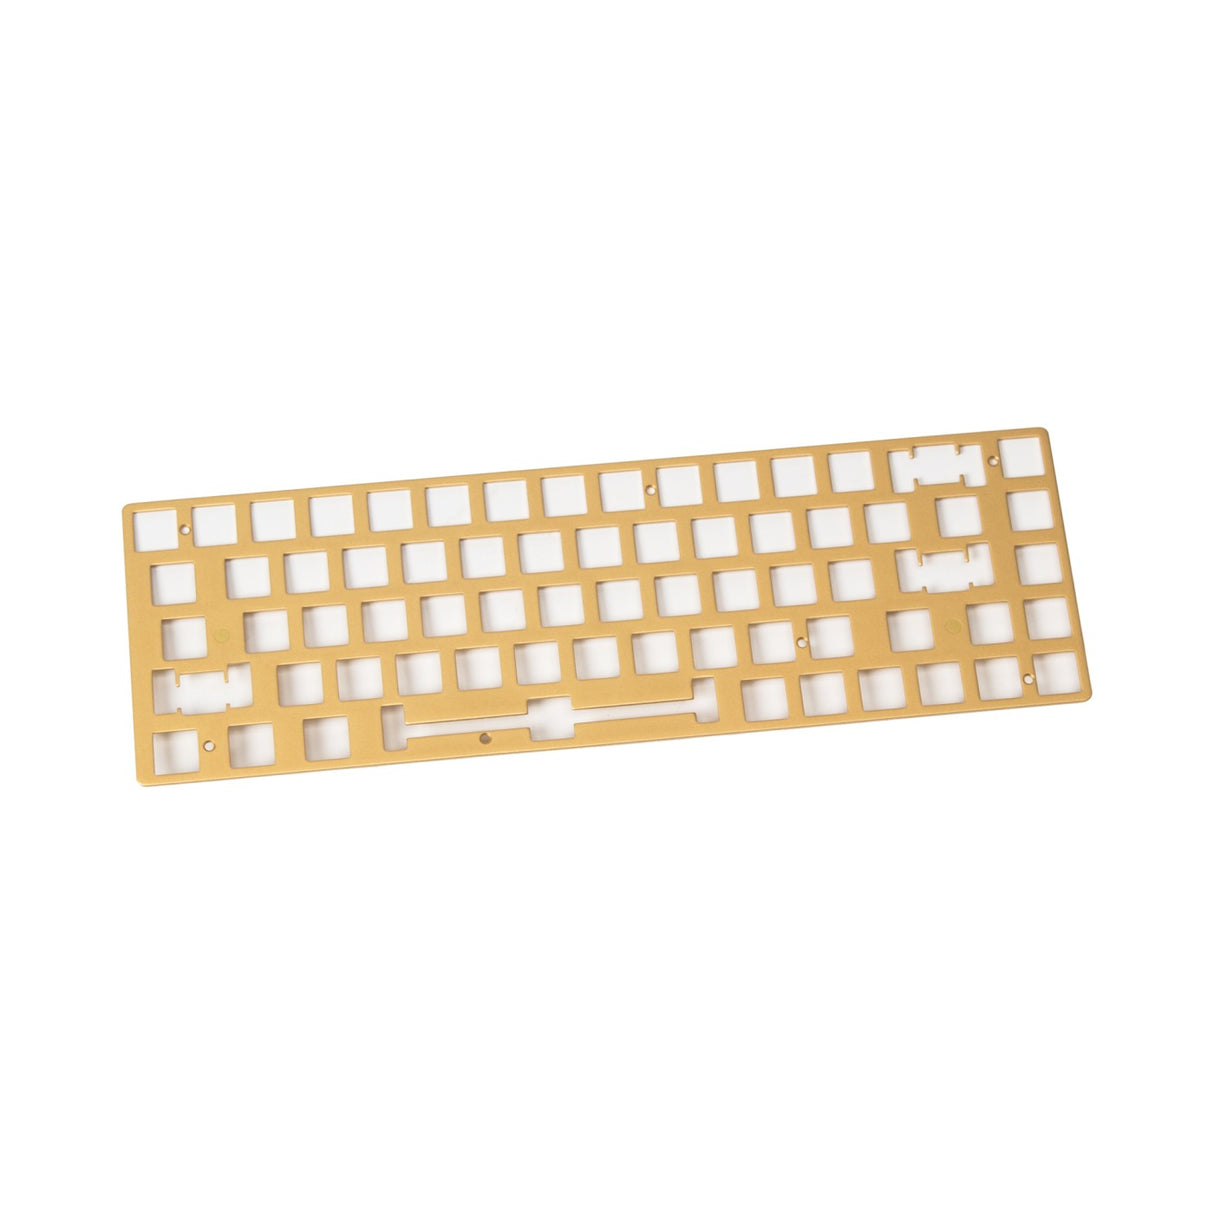 Keychron K6 Pro Keyboard Brass Plate ANSI Layout